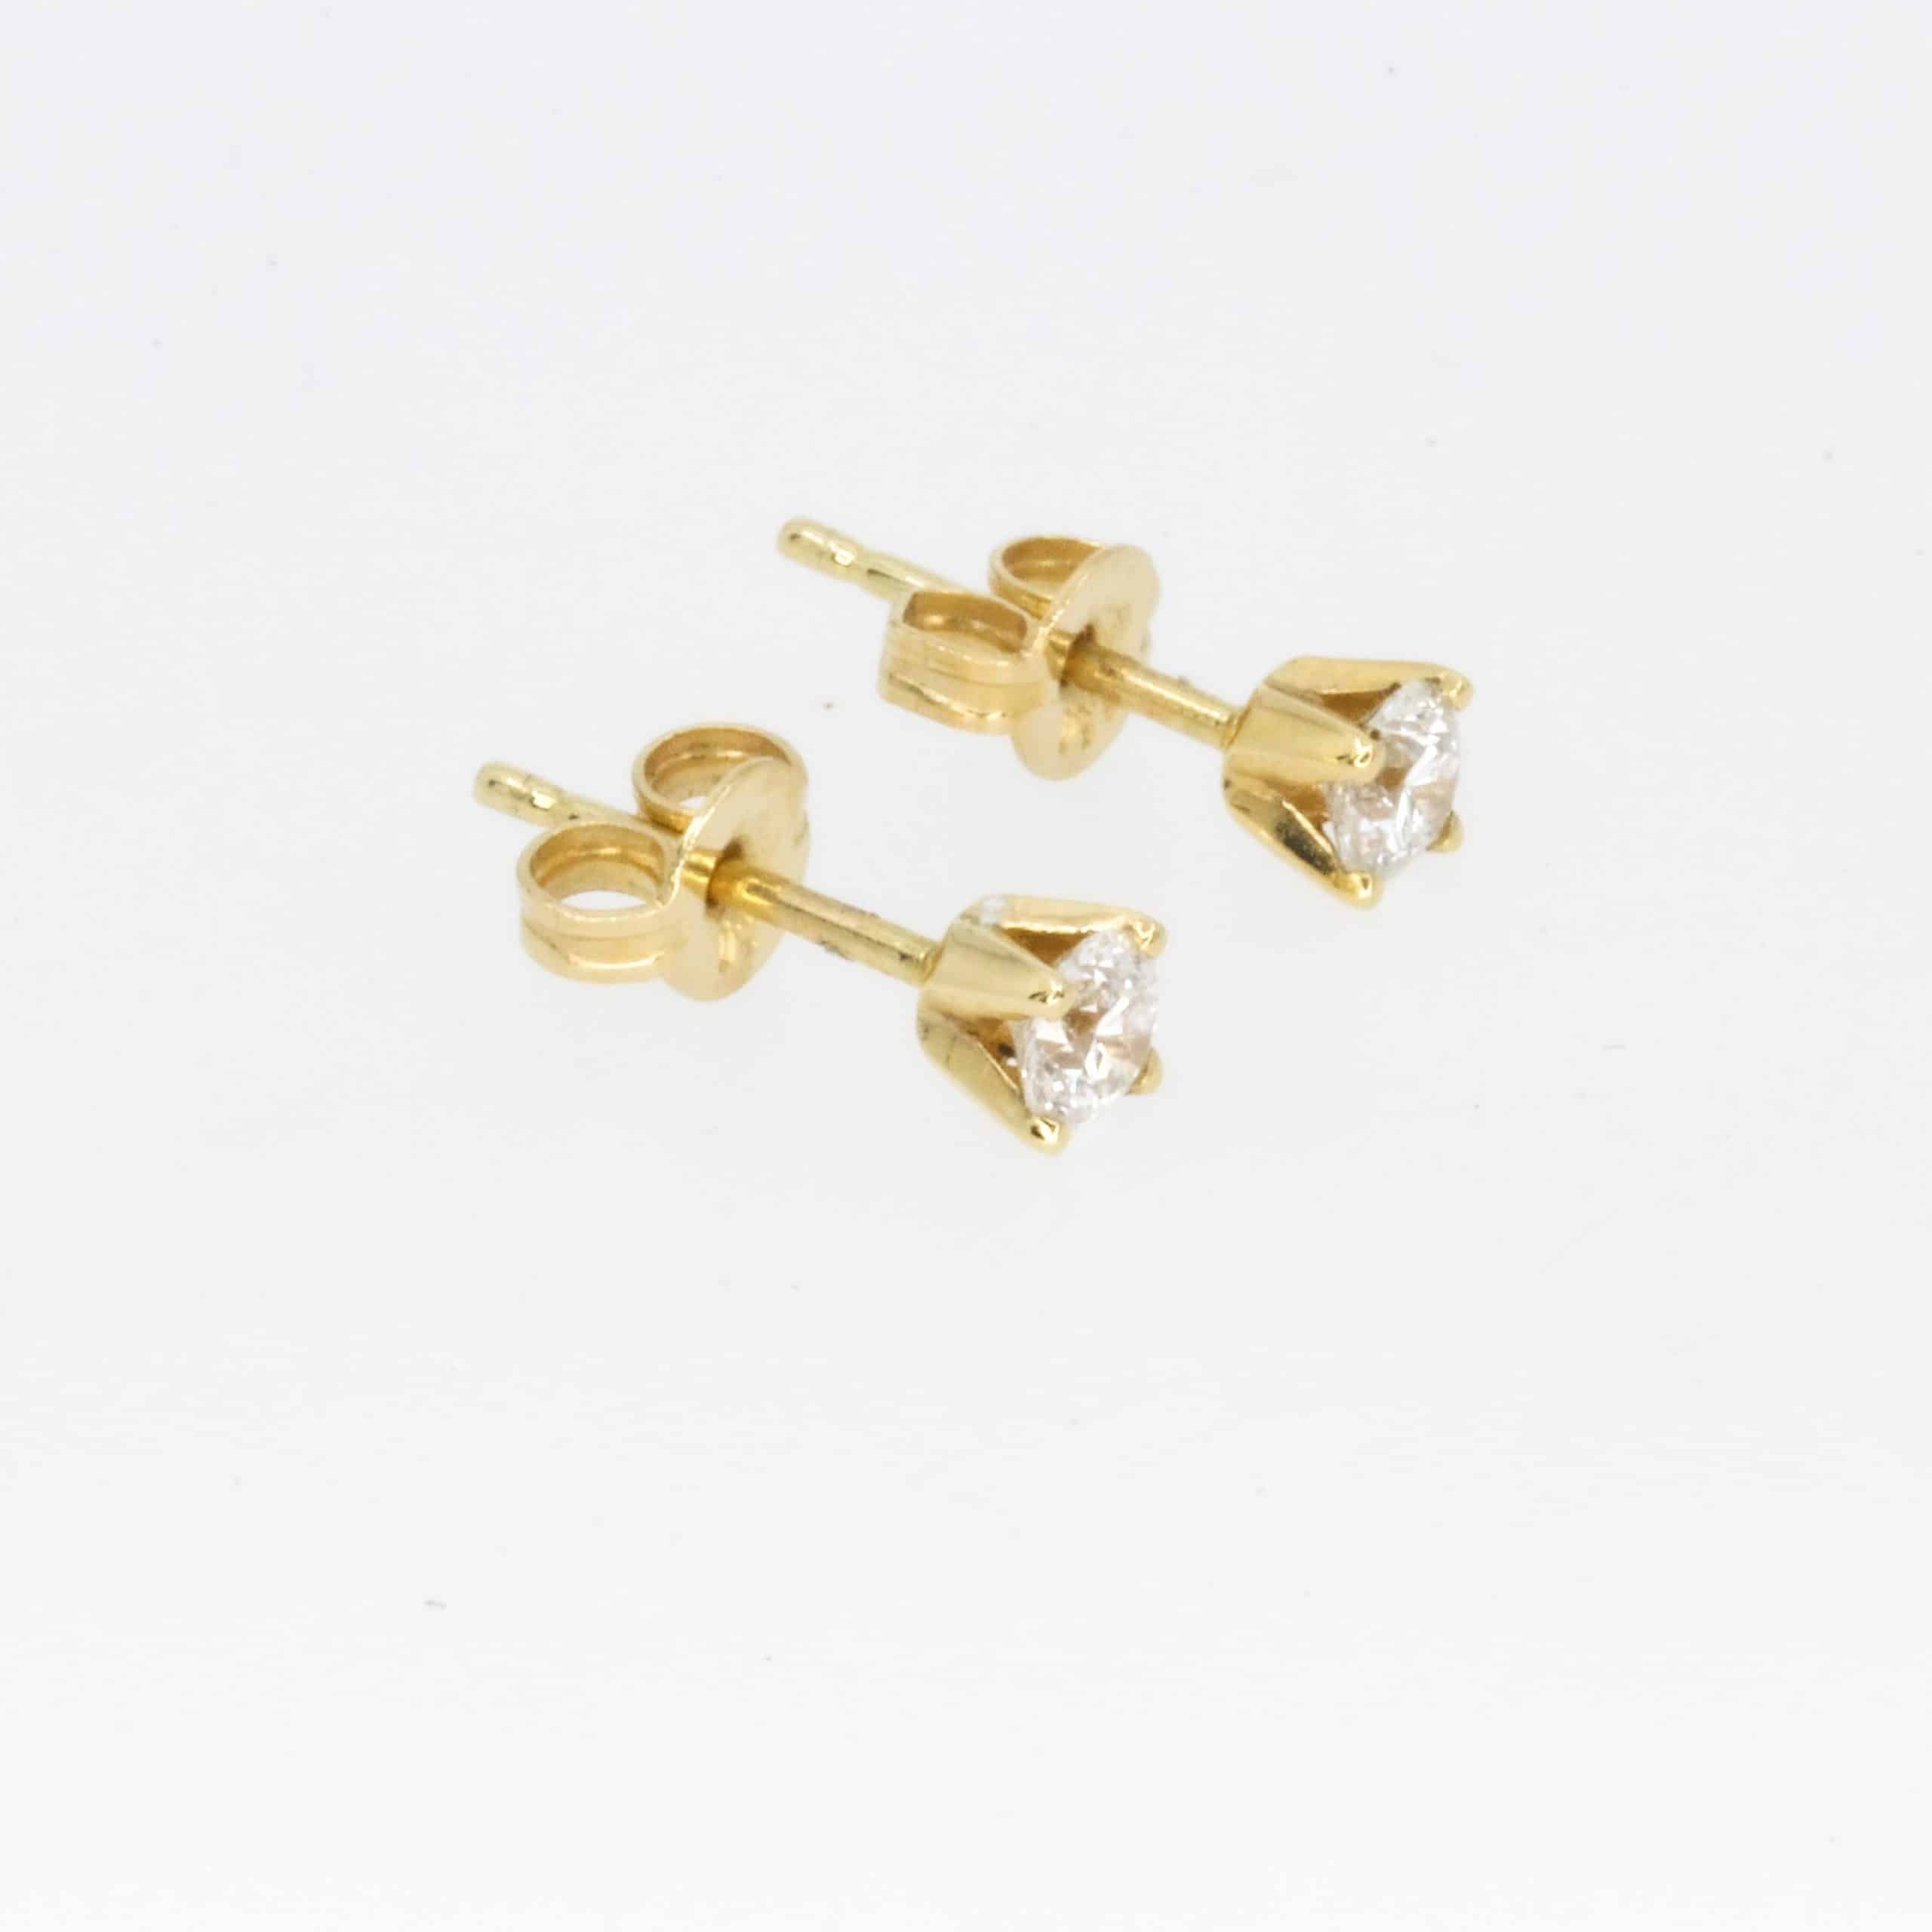 18ct Yellow Gold White RBC Diamond Stud Earrings | Allgem Jewellers